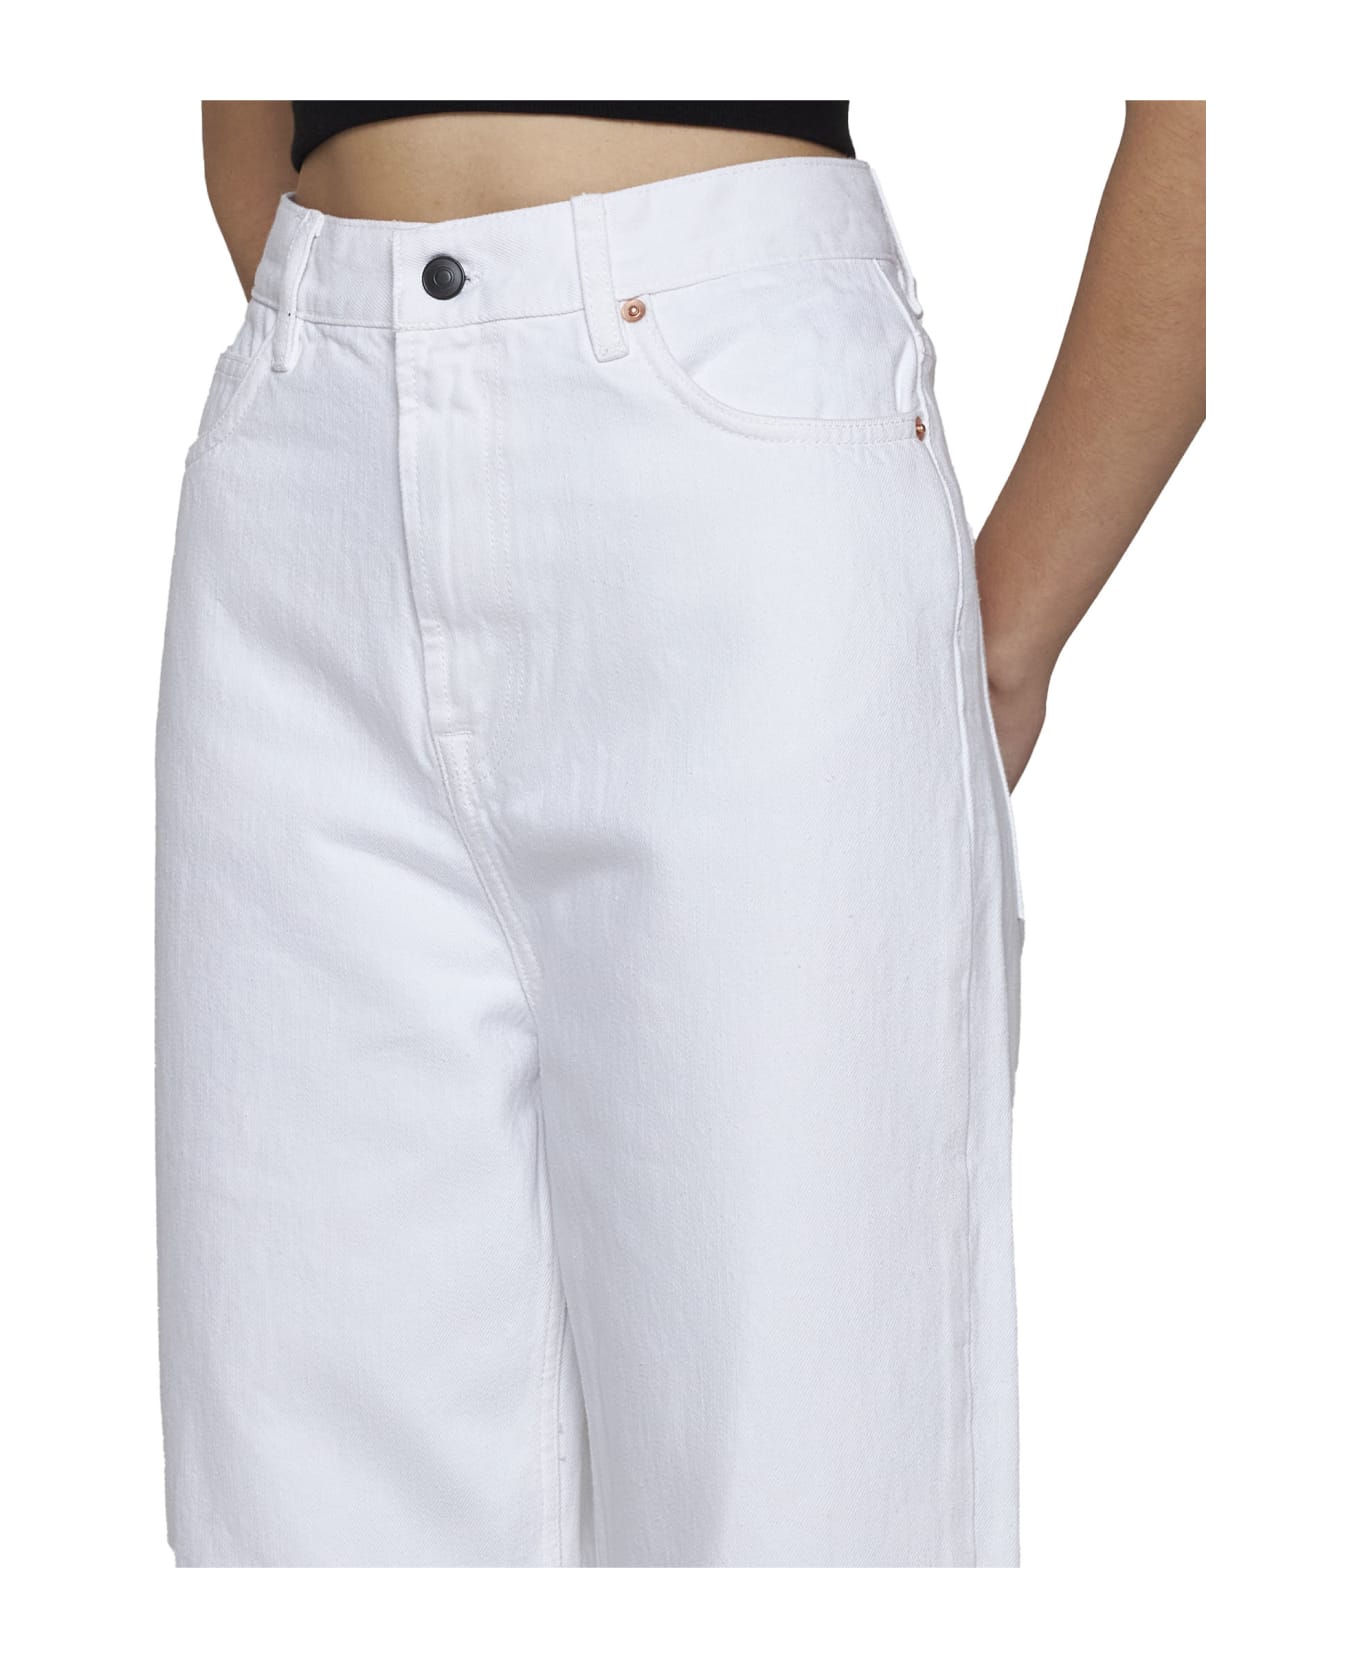 WARDROBE.NYC Jeans - White